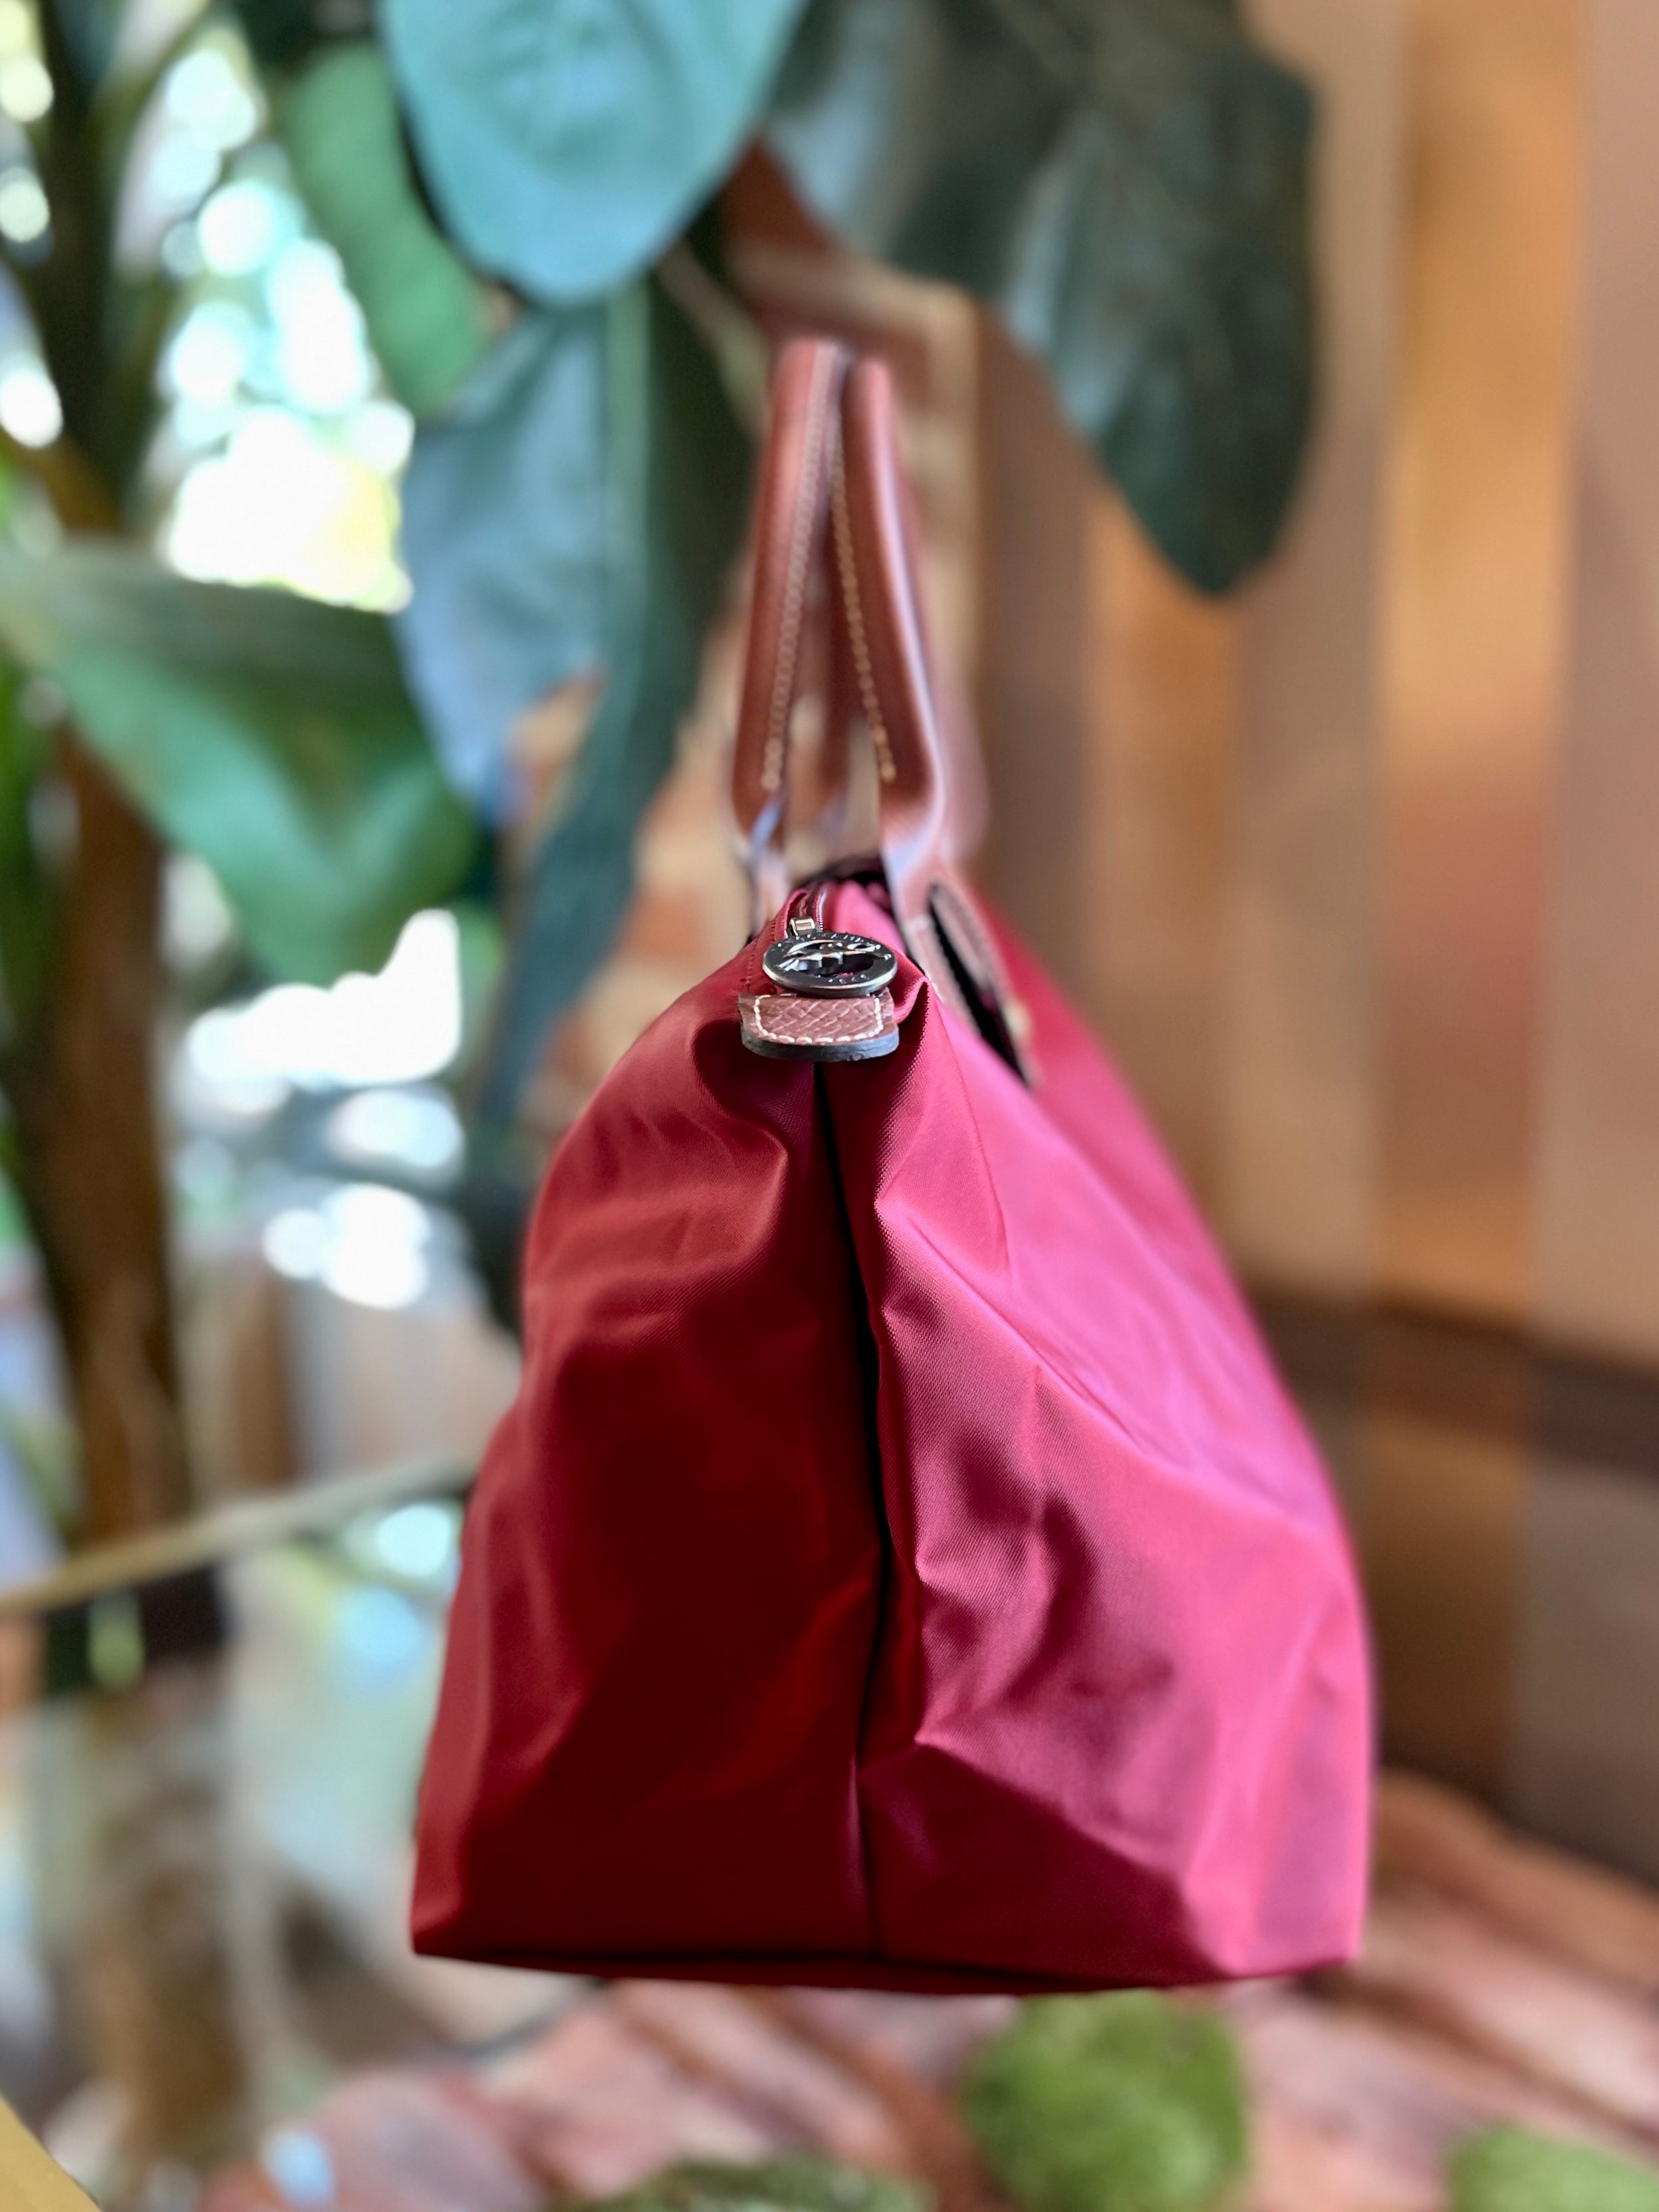 Longchamp Le Pliage Original L Travel Tote Bag RED